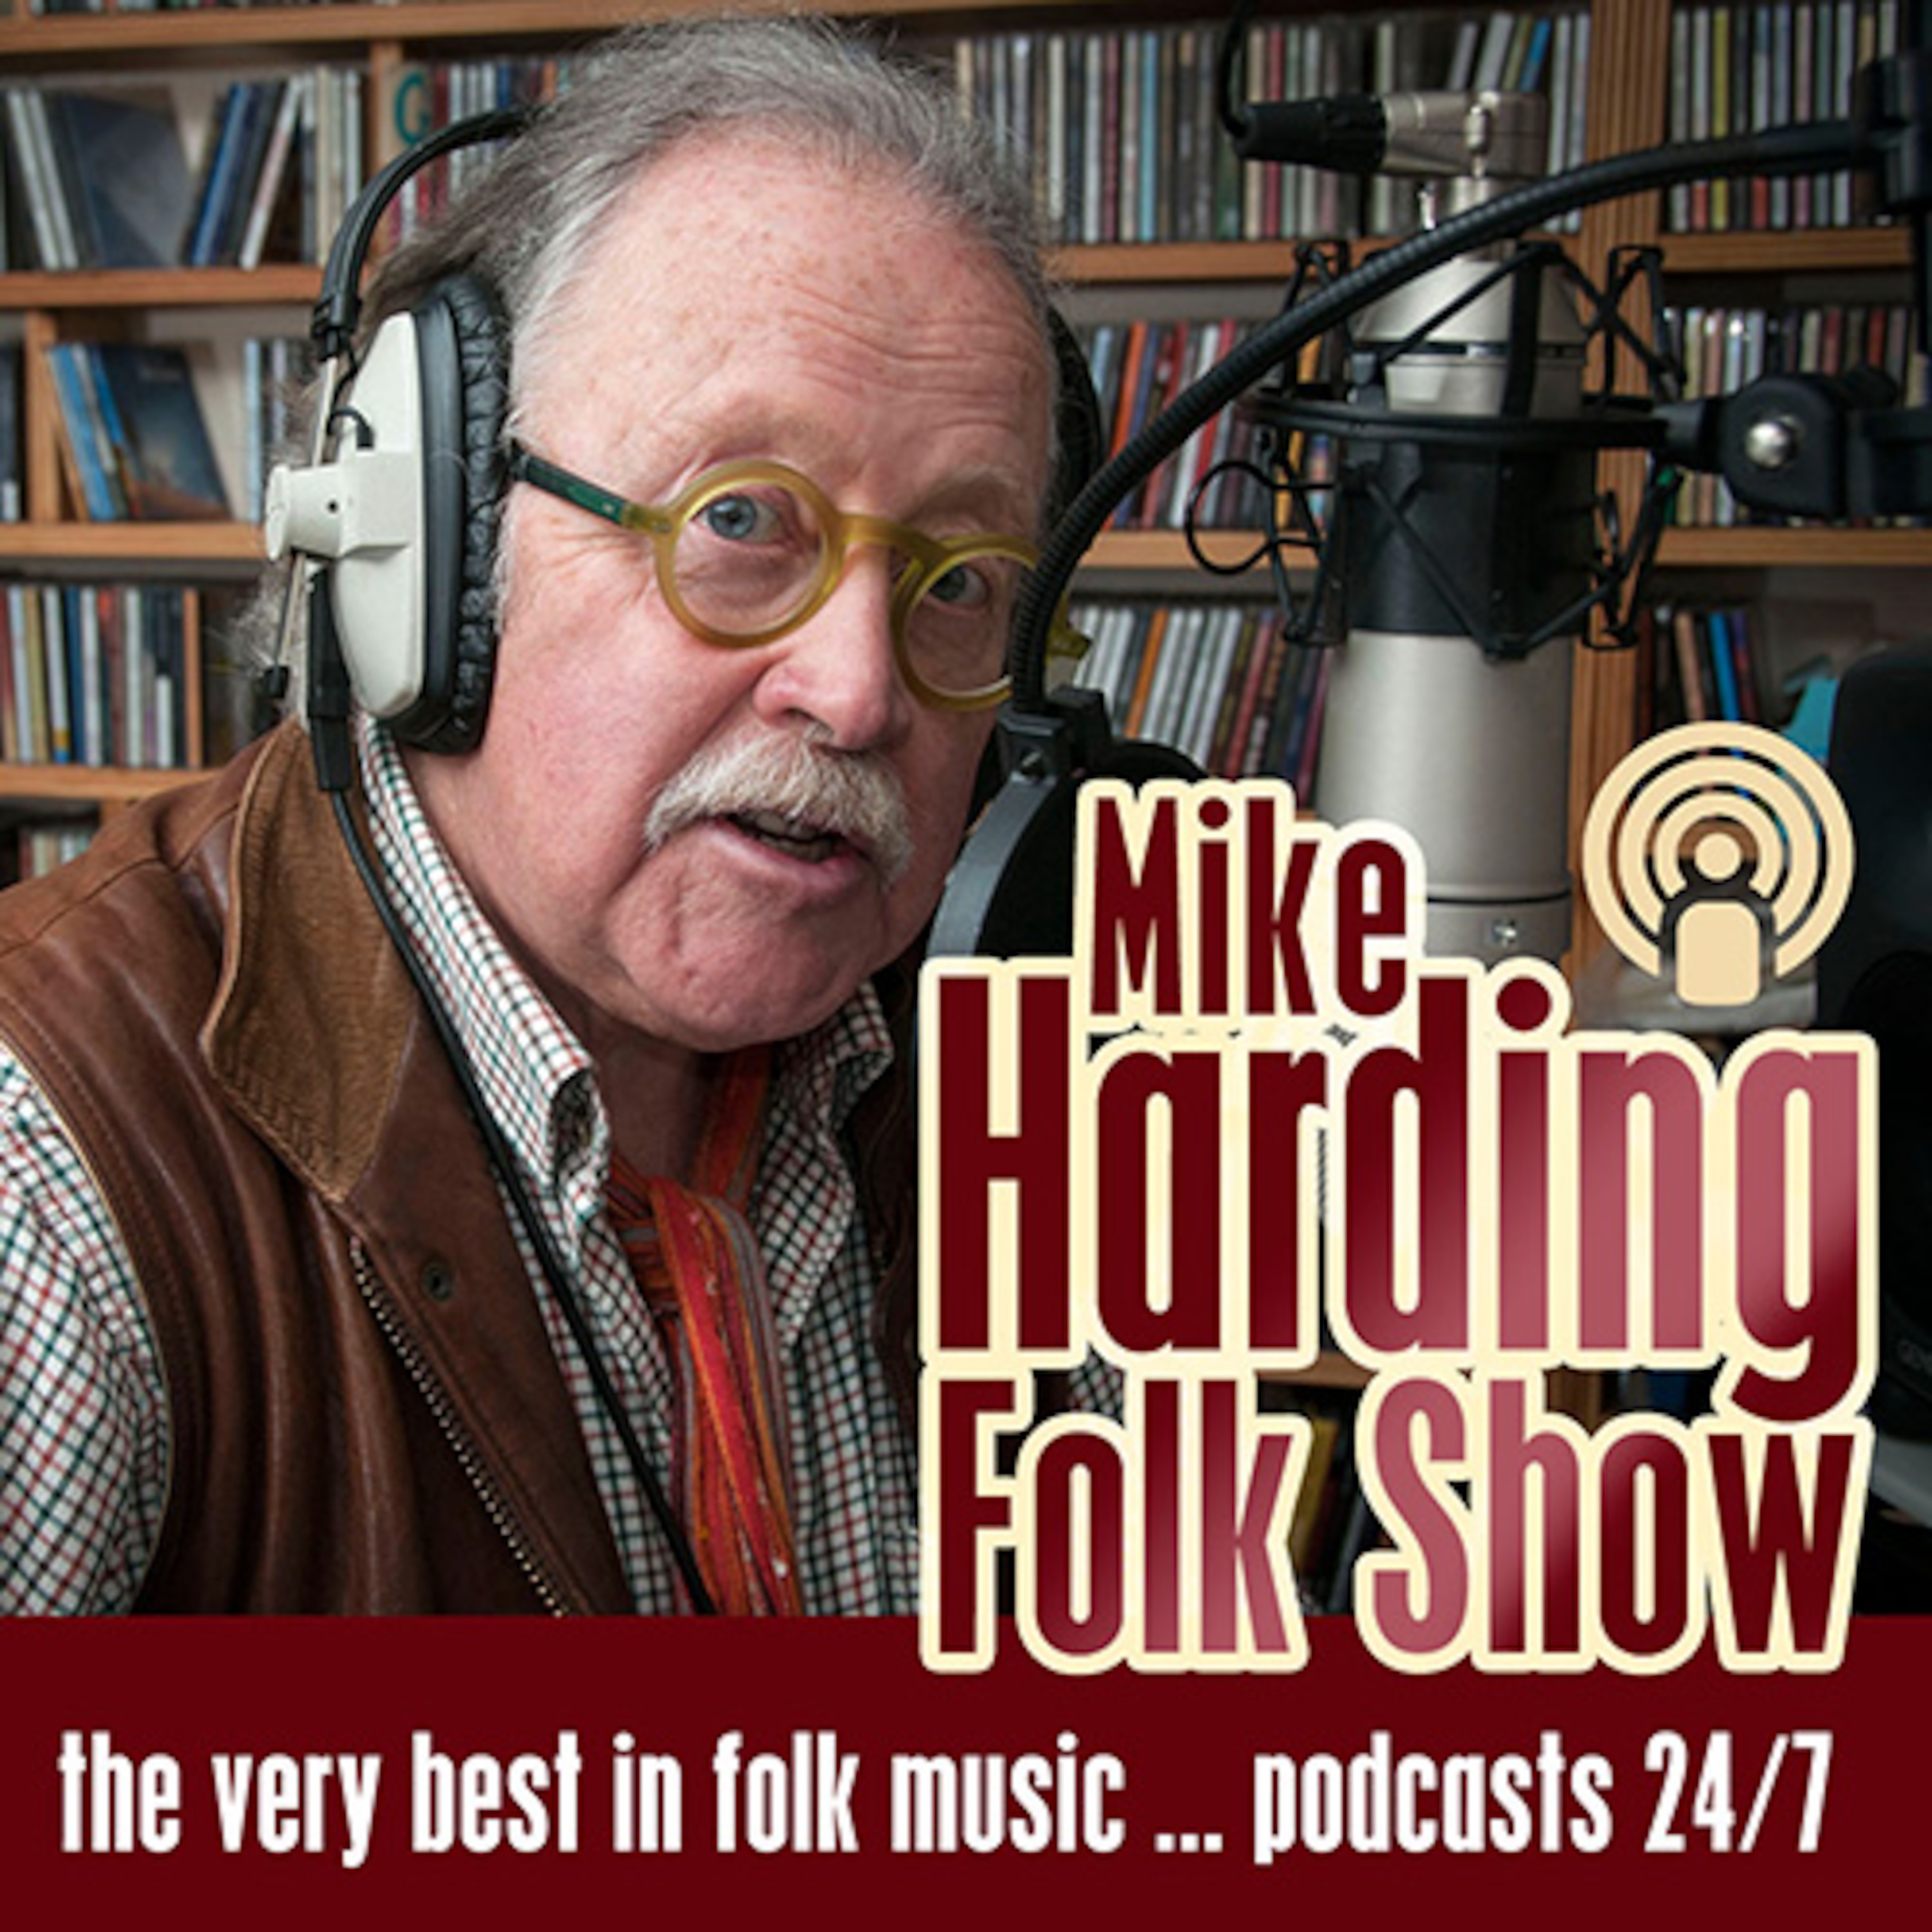 Mike Harding Folk Show 185